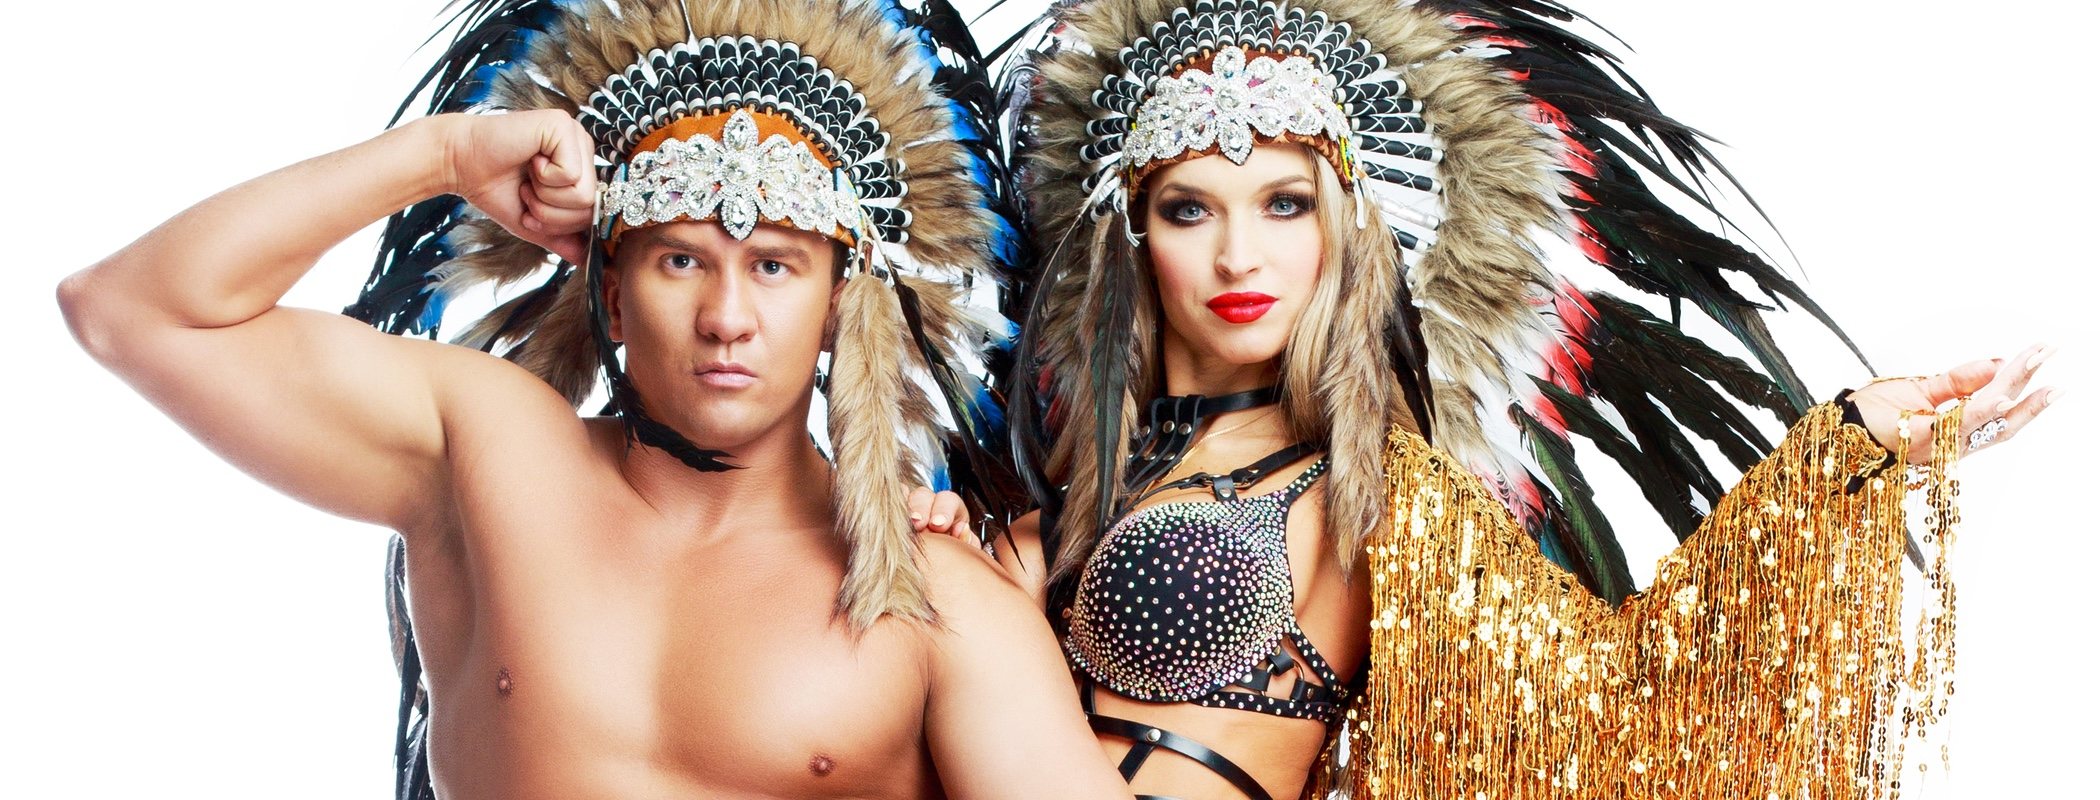 Disfraces eróticos para Carnaval: seduce a tu pareja